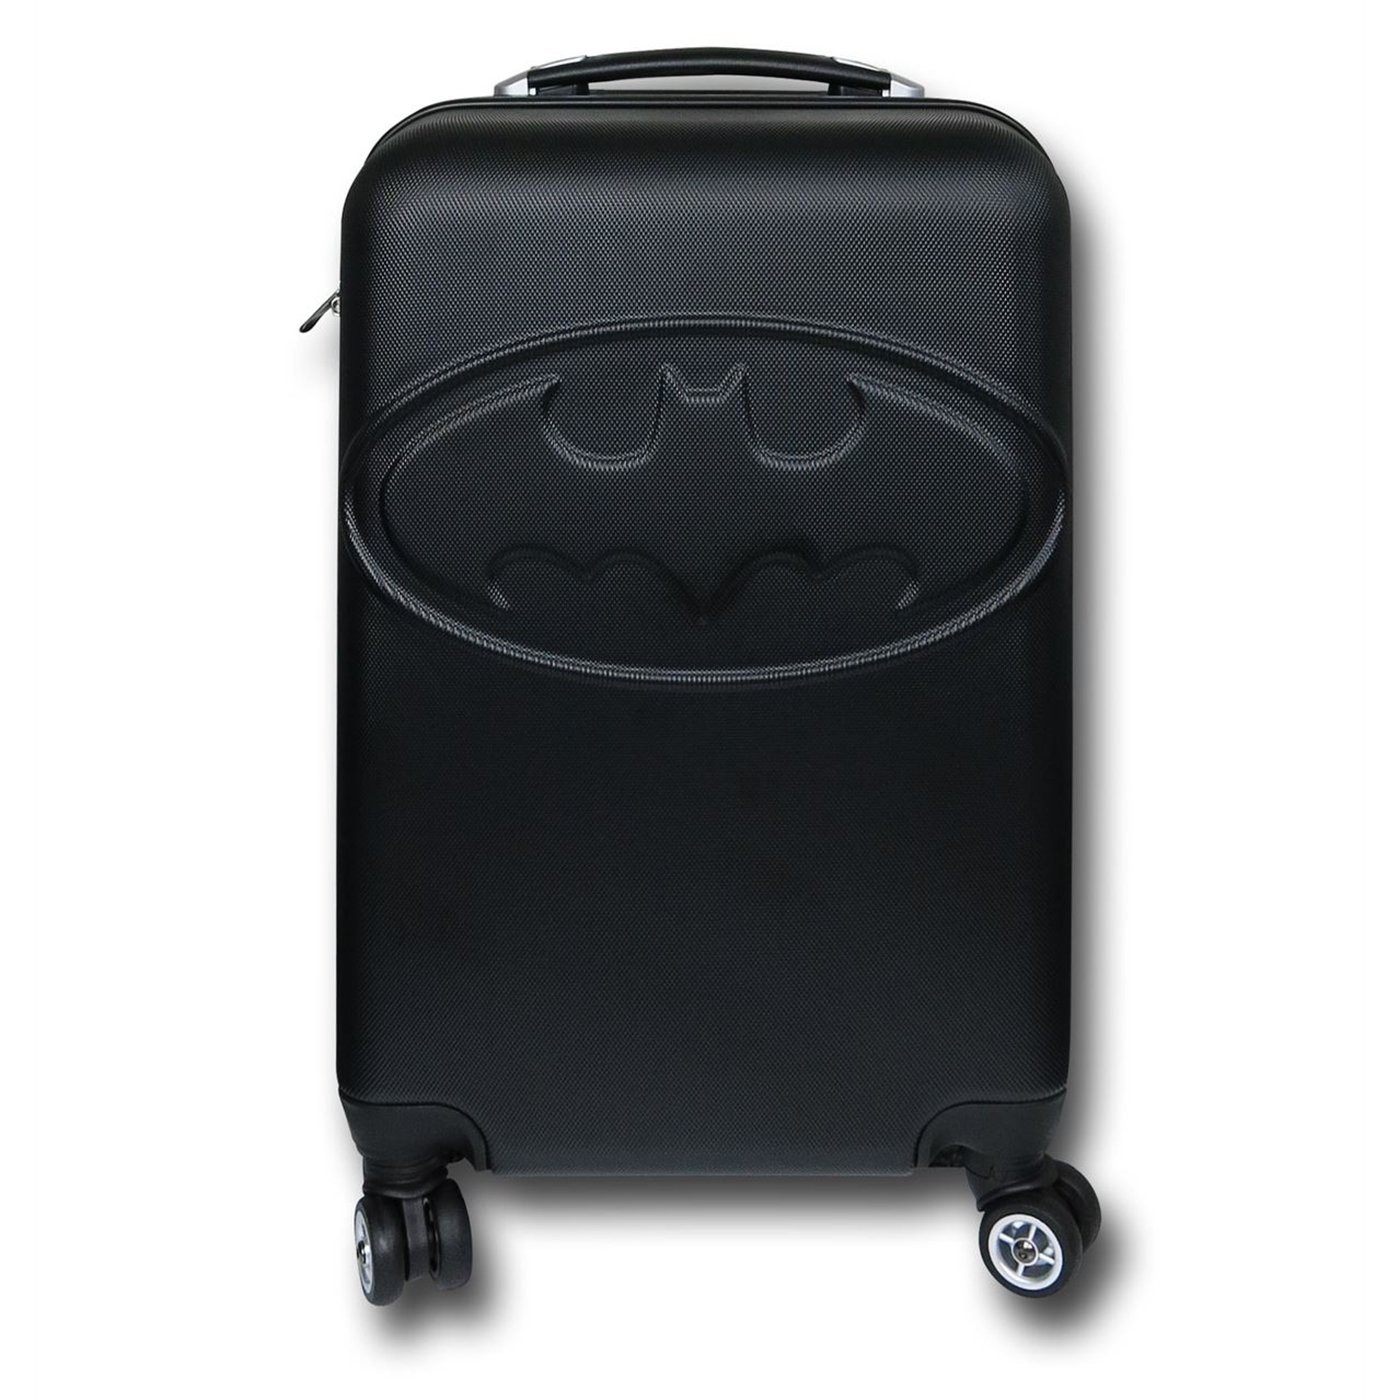 Batman Hardcase Trolley Suitcase